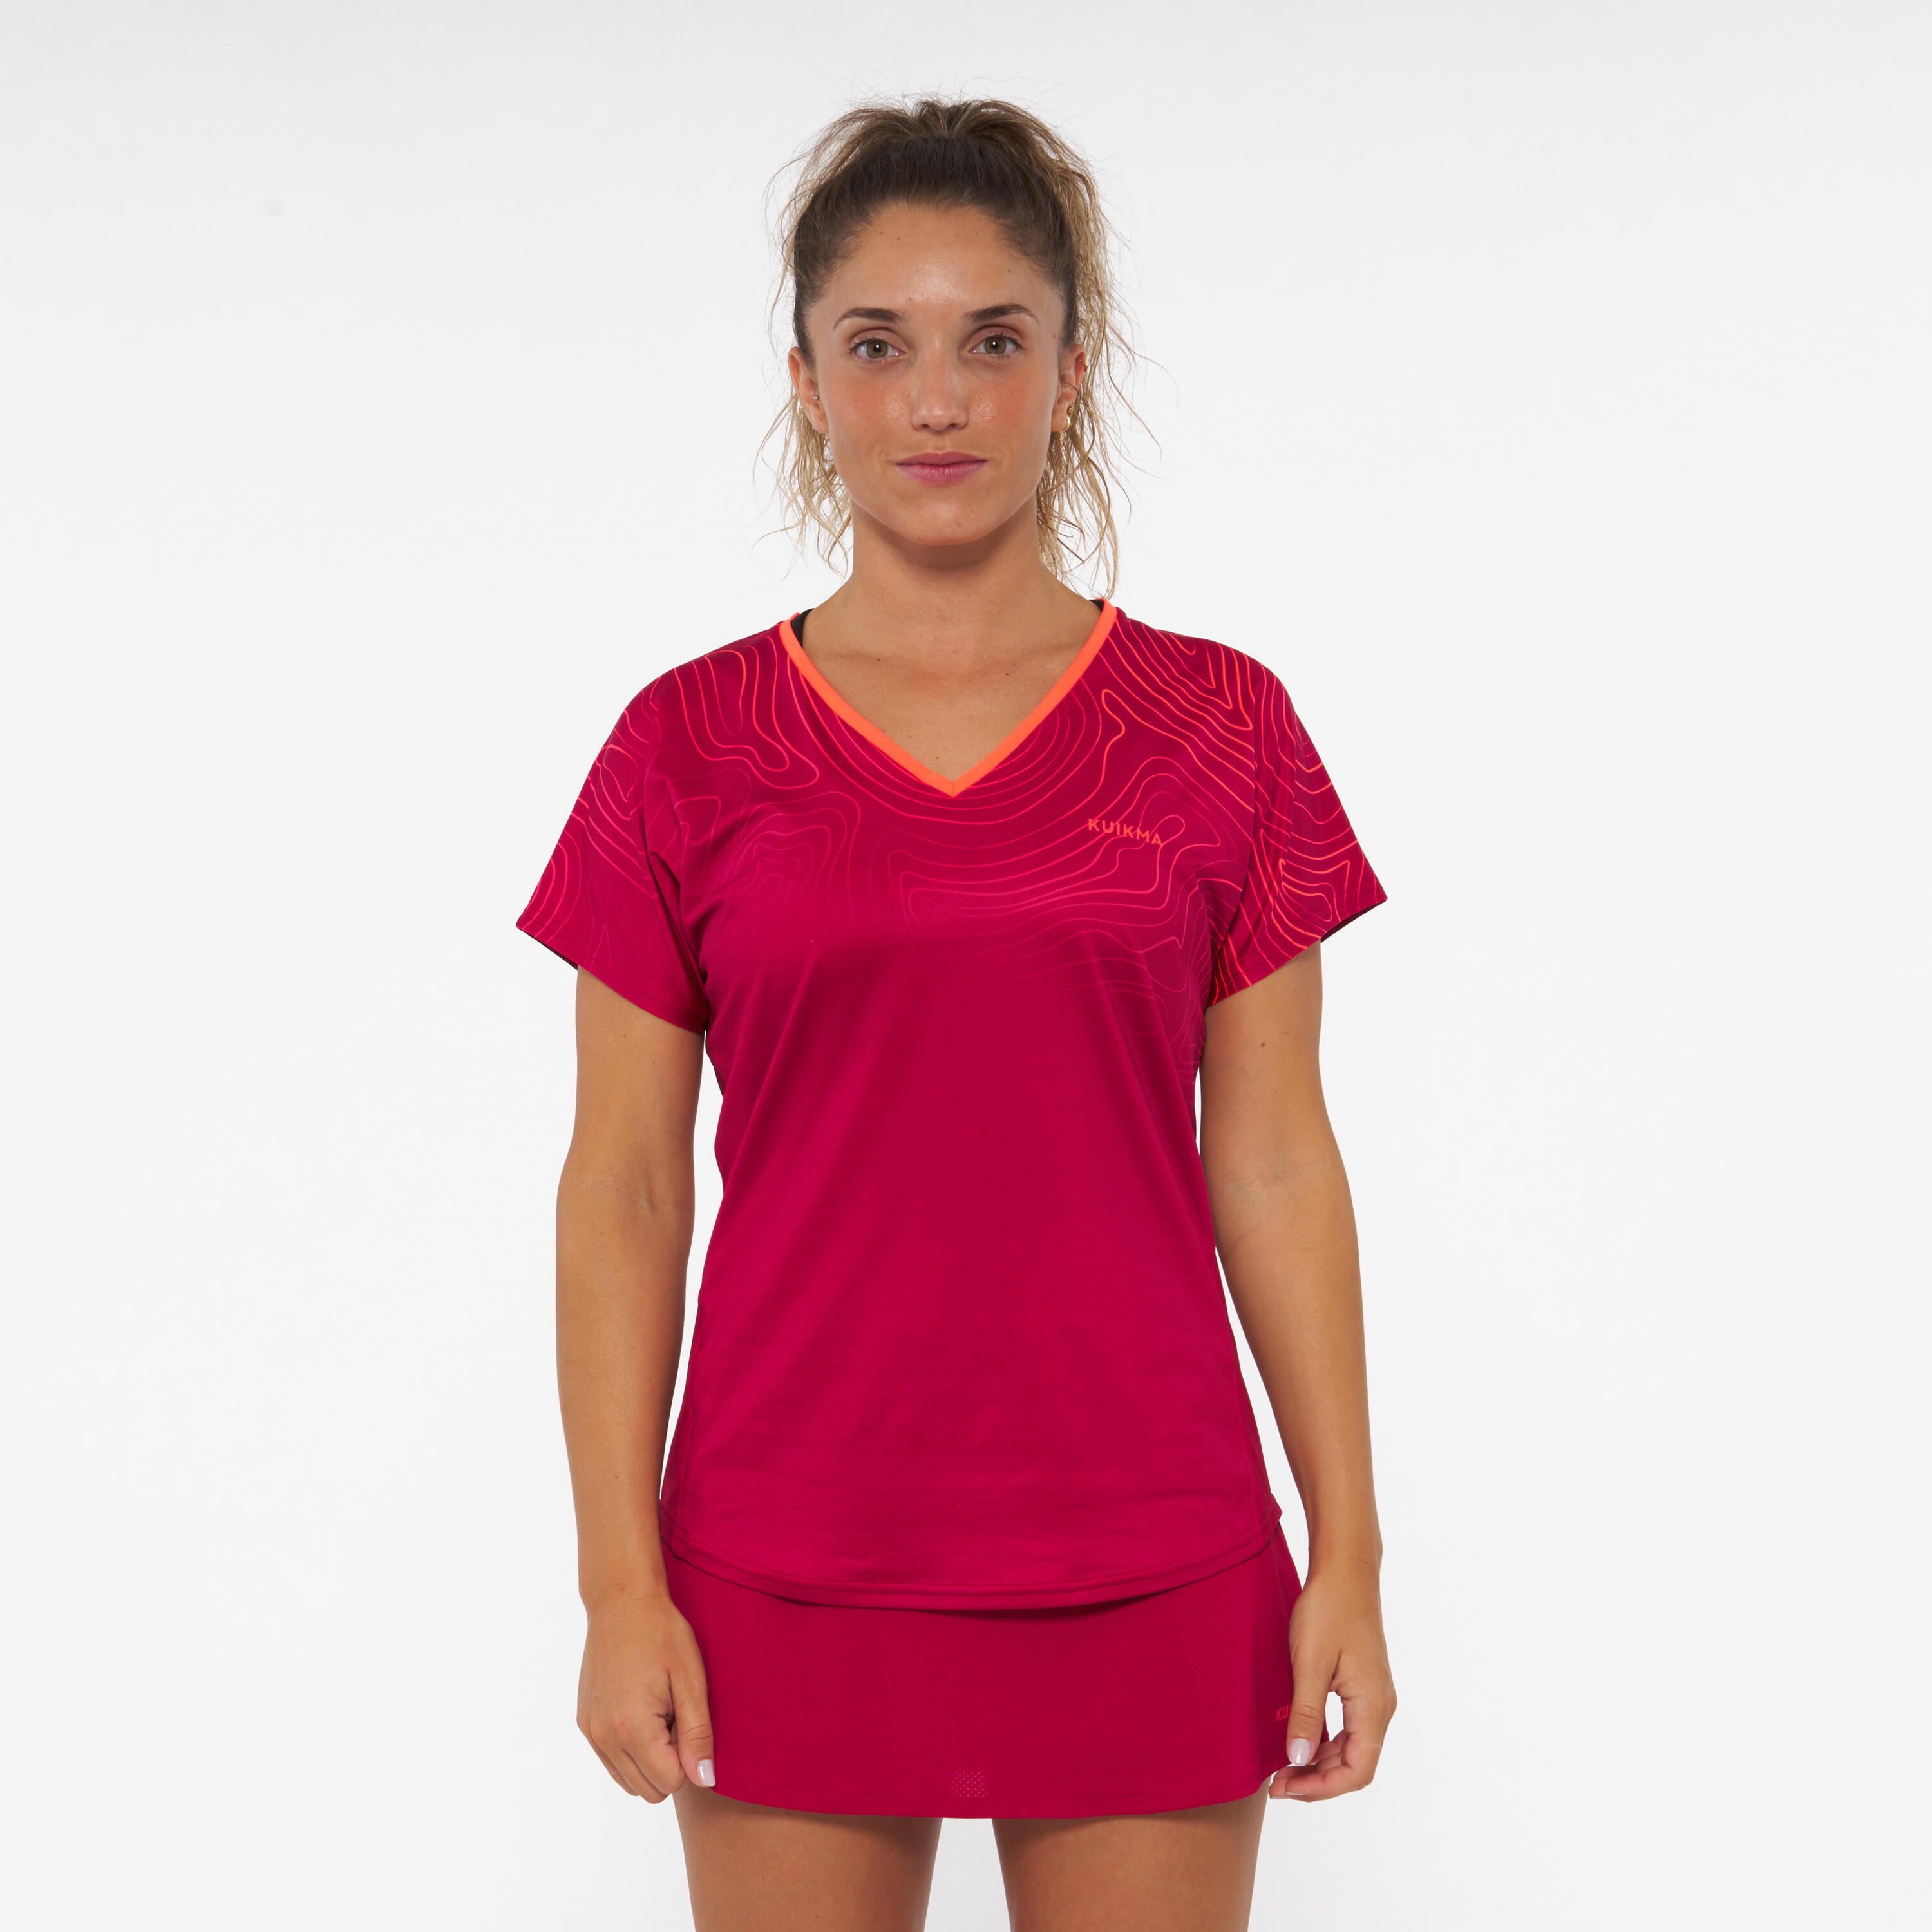 KUIKMA Women's Breathable Short-Sleeved Padel T-Shirt 500 - Red